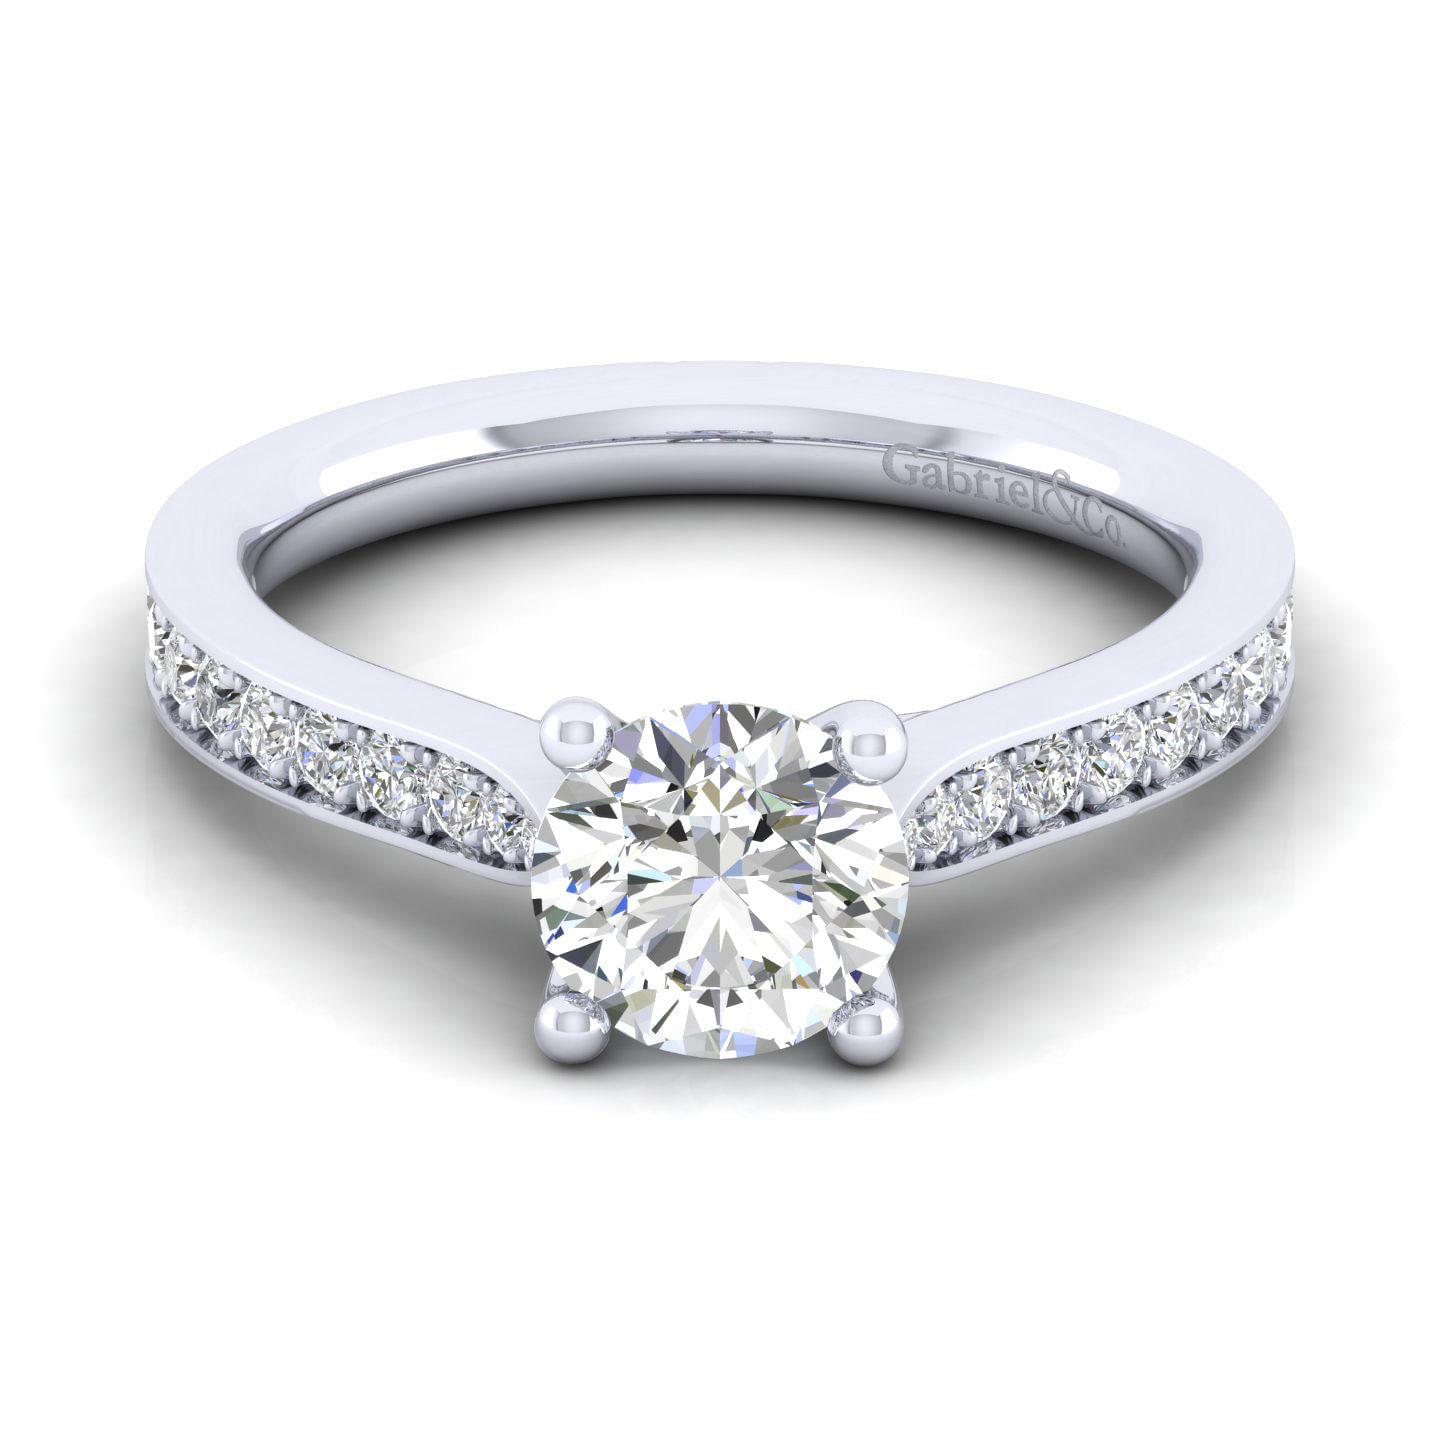 Merritt - 14K White Gold Round Diamond Engagement Ring